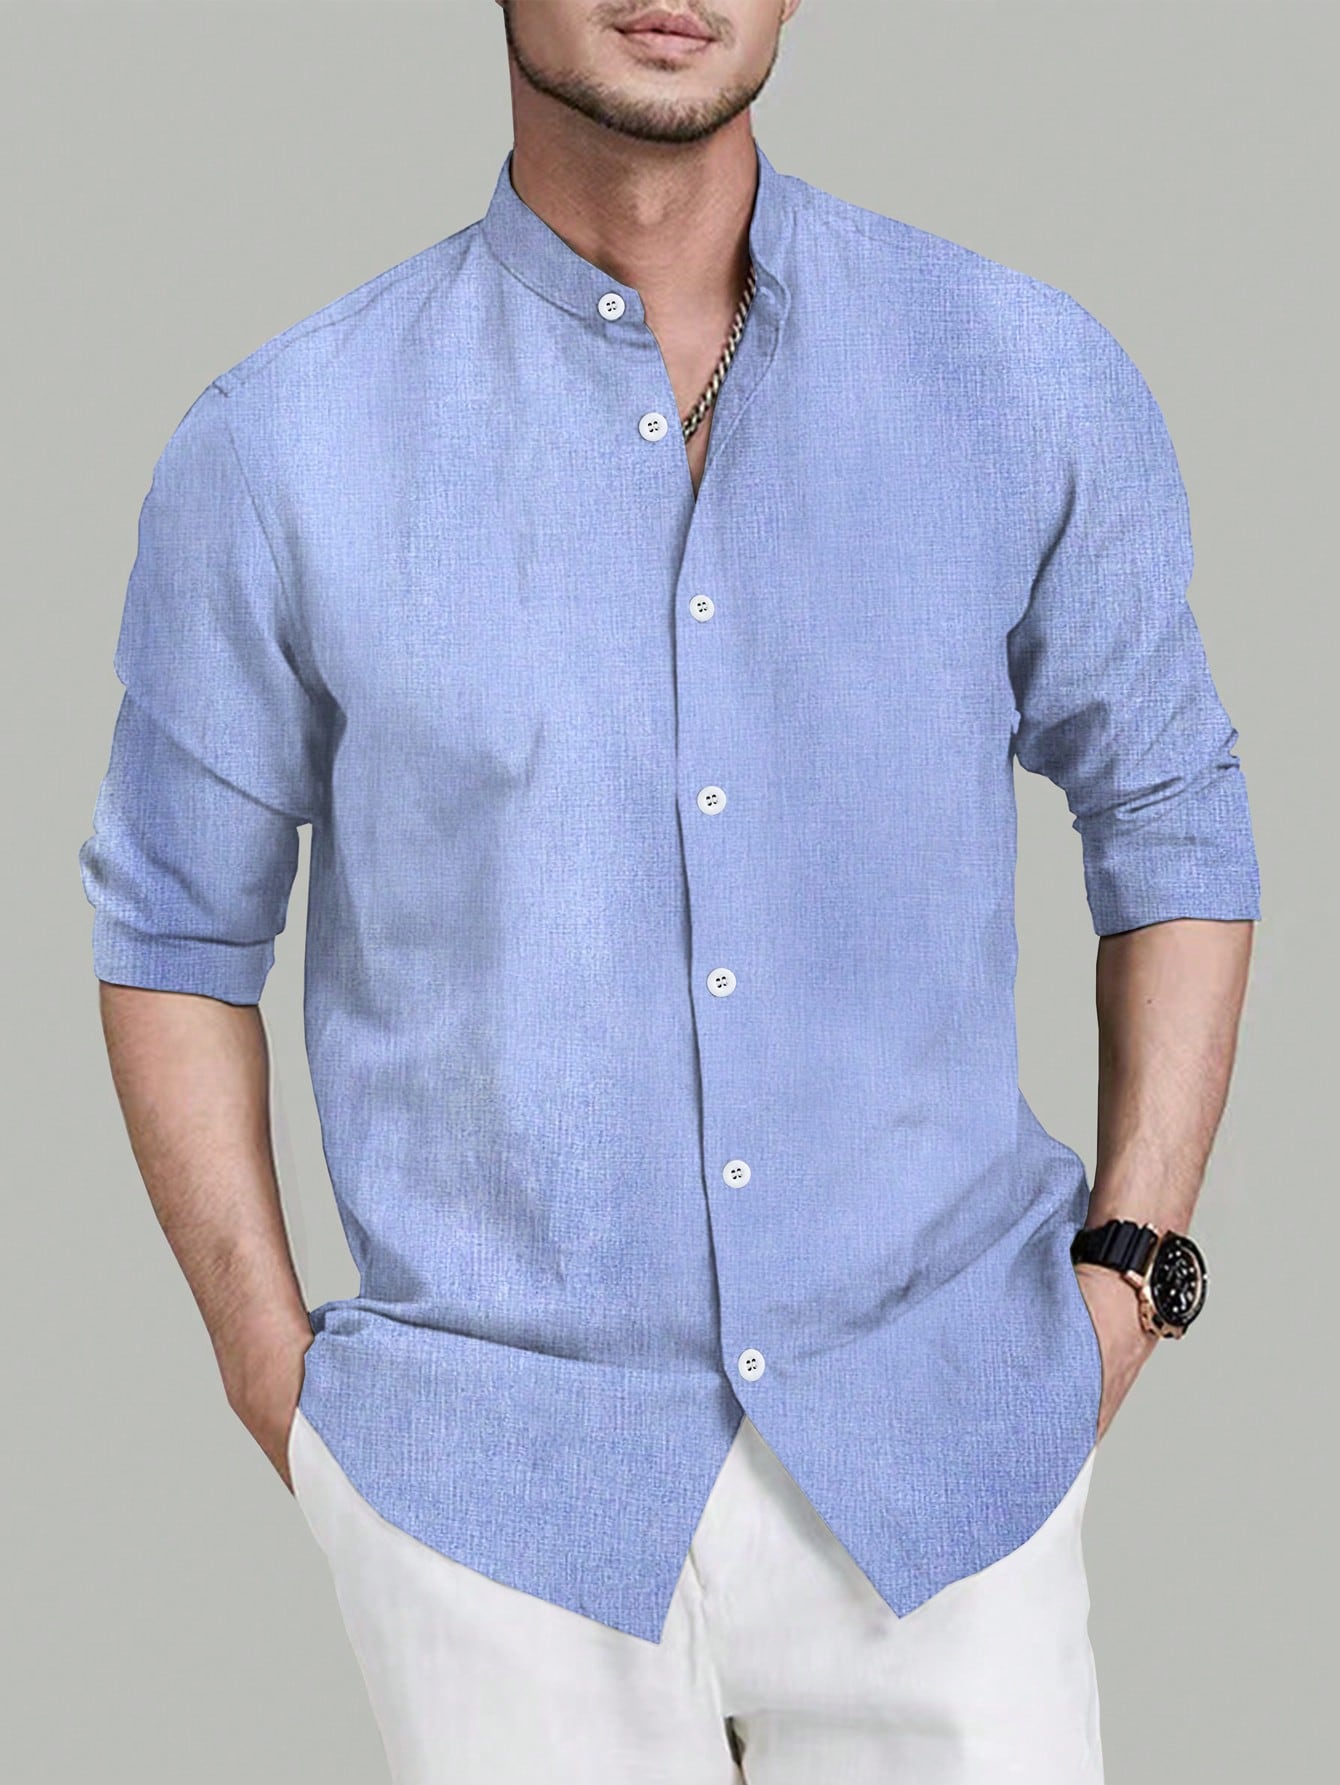 Men's Spring/Summer Casual Stand Collar Long Sleeve Shirt